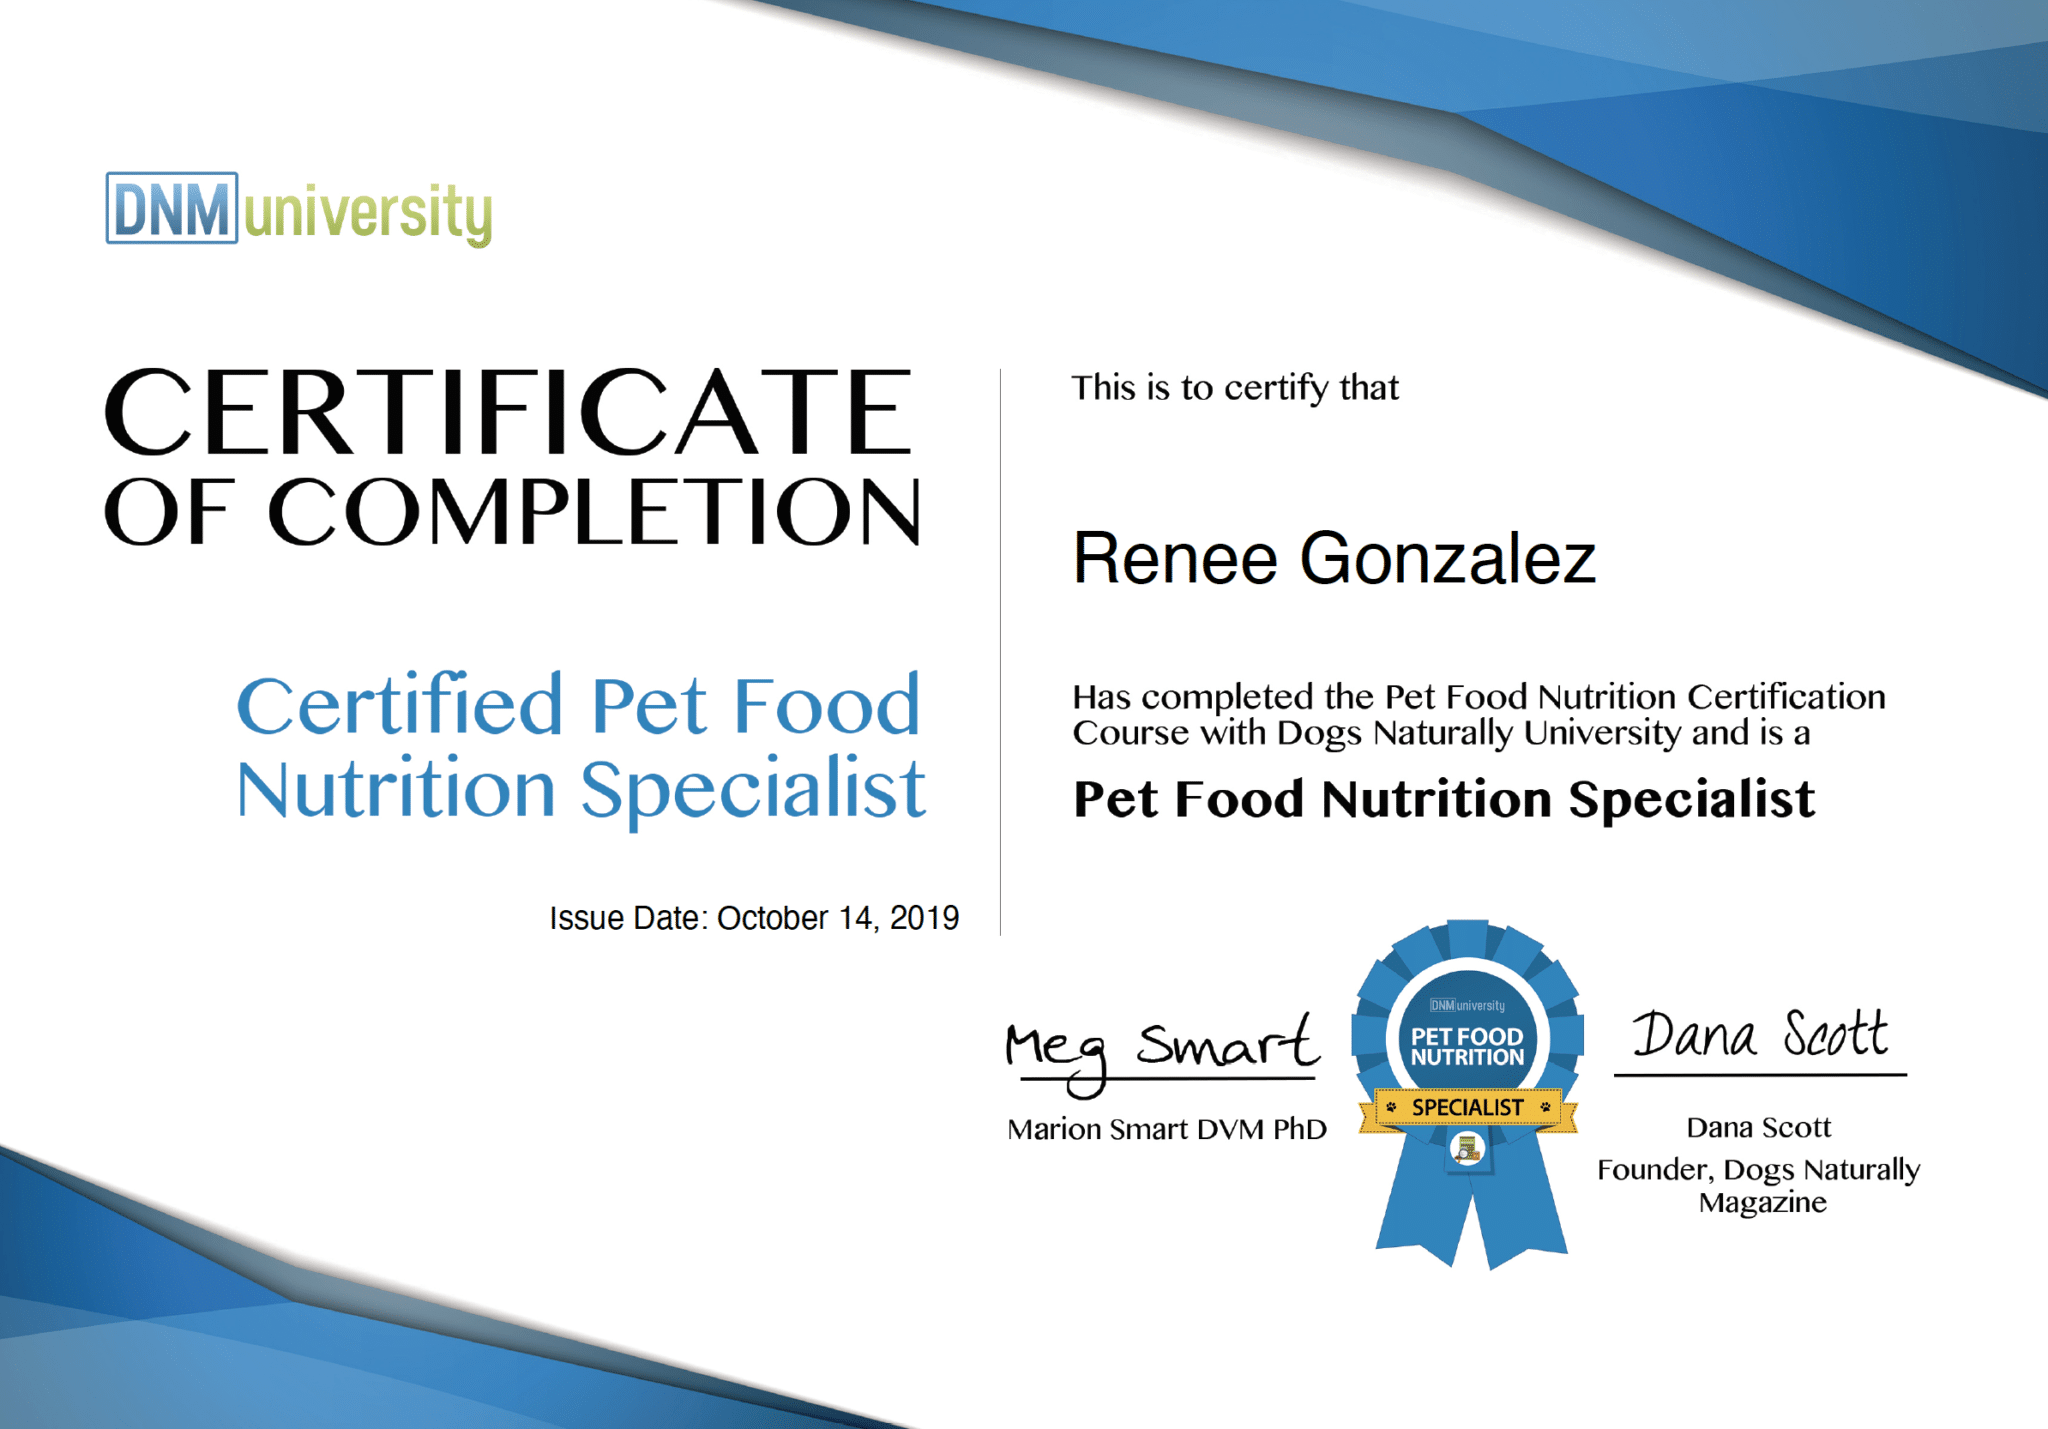 Certified Pet Food Nutrition Specialist Certificate - Ranee